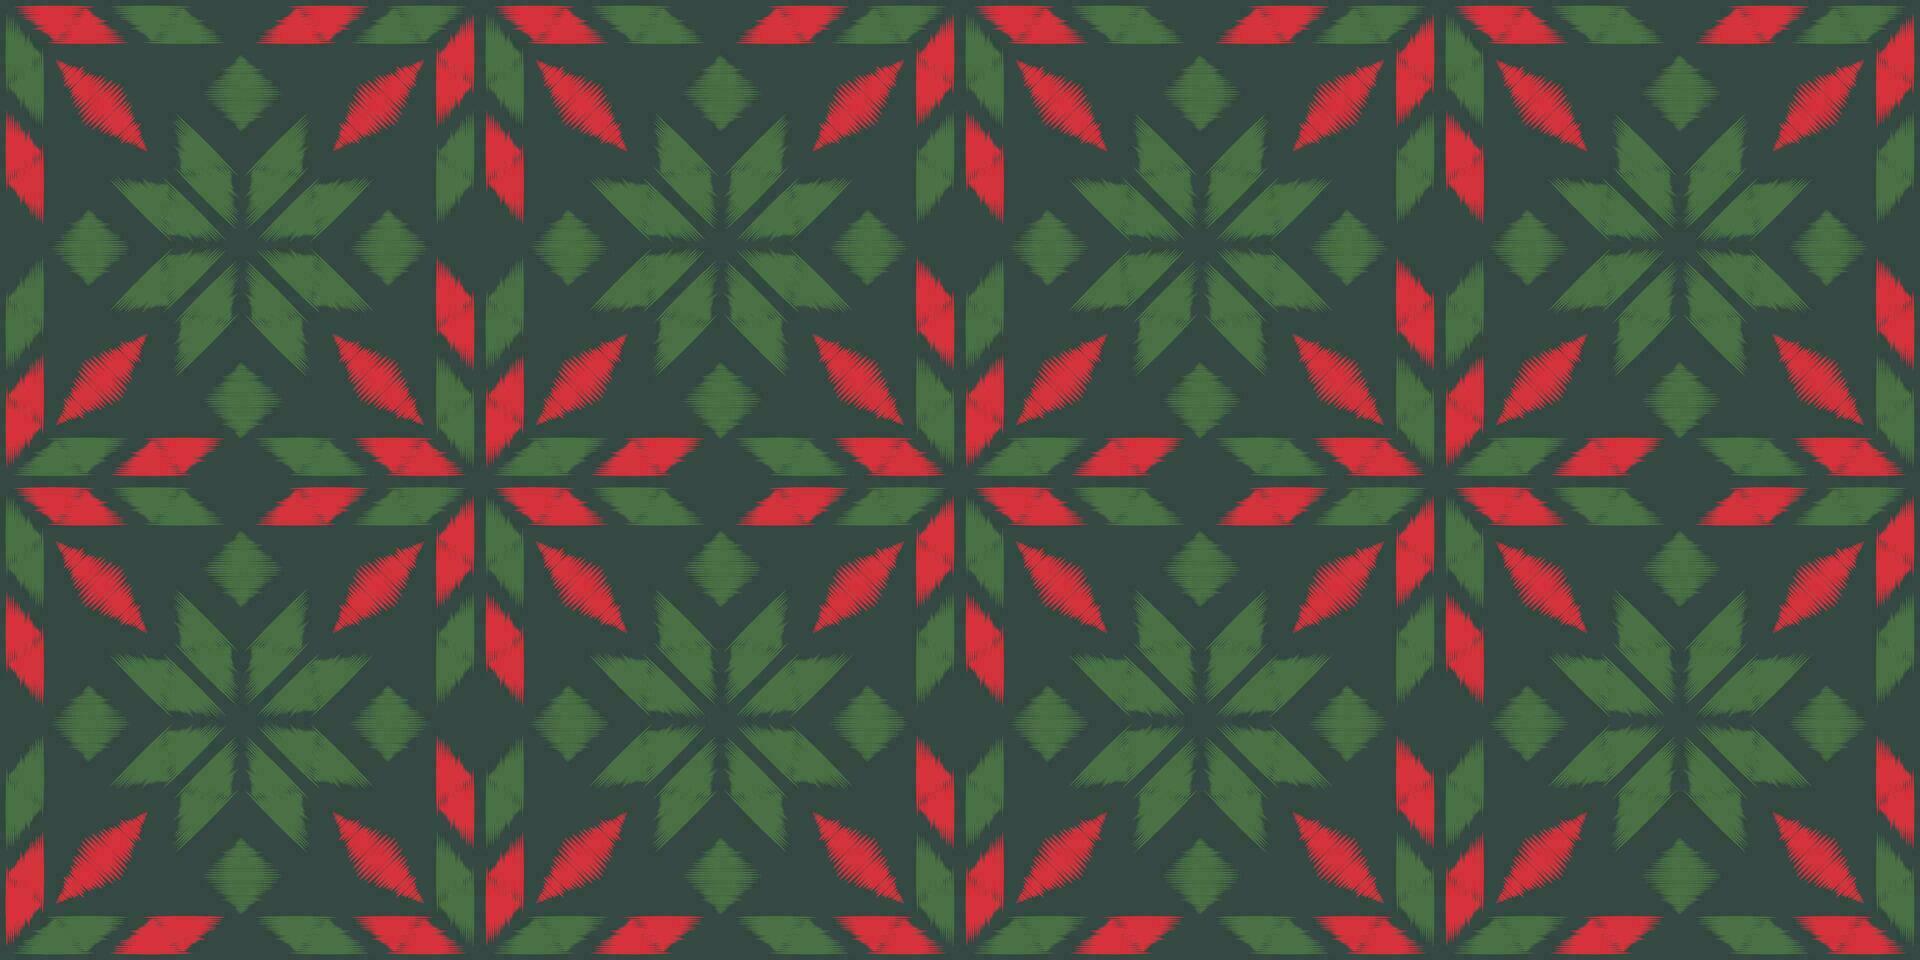 Motif Christmas ethnic handmade beautiful Ikat art. Christmas background. folk embroidery Christmas pattern, geometric art ornament print. red, green, white colors. snowflake, star, poinsettia design. vector